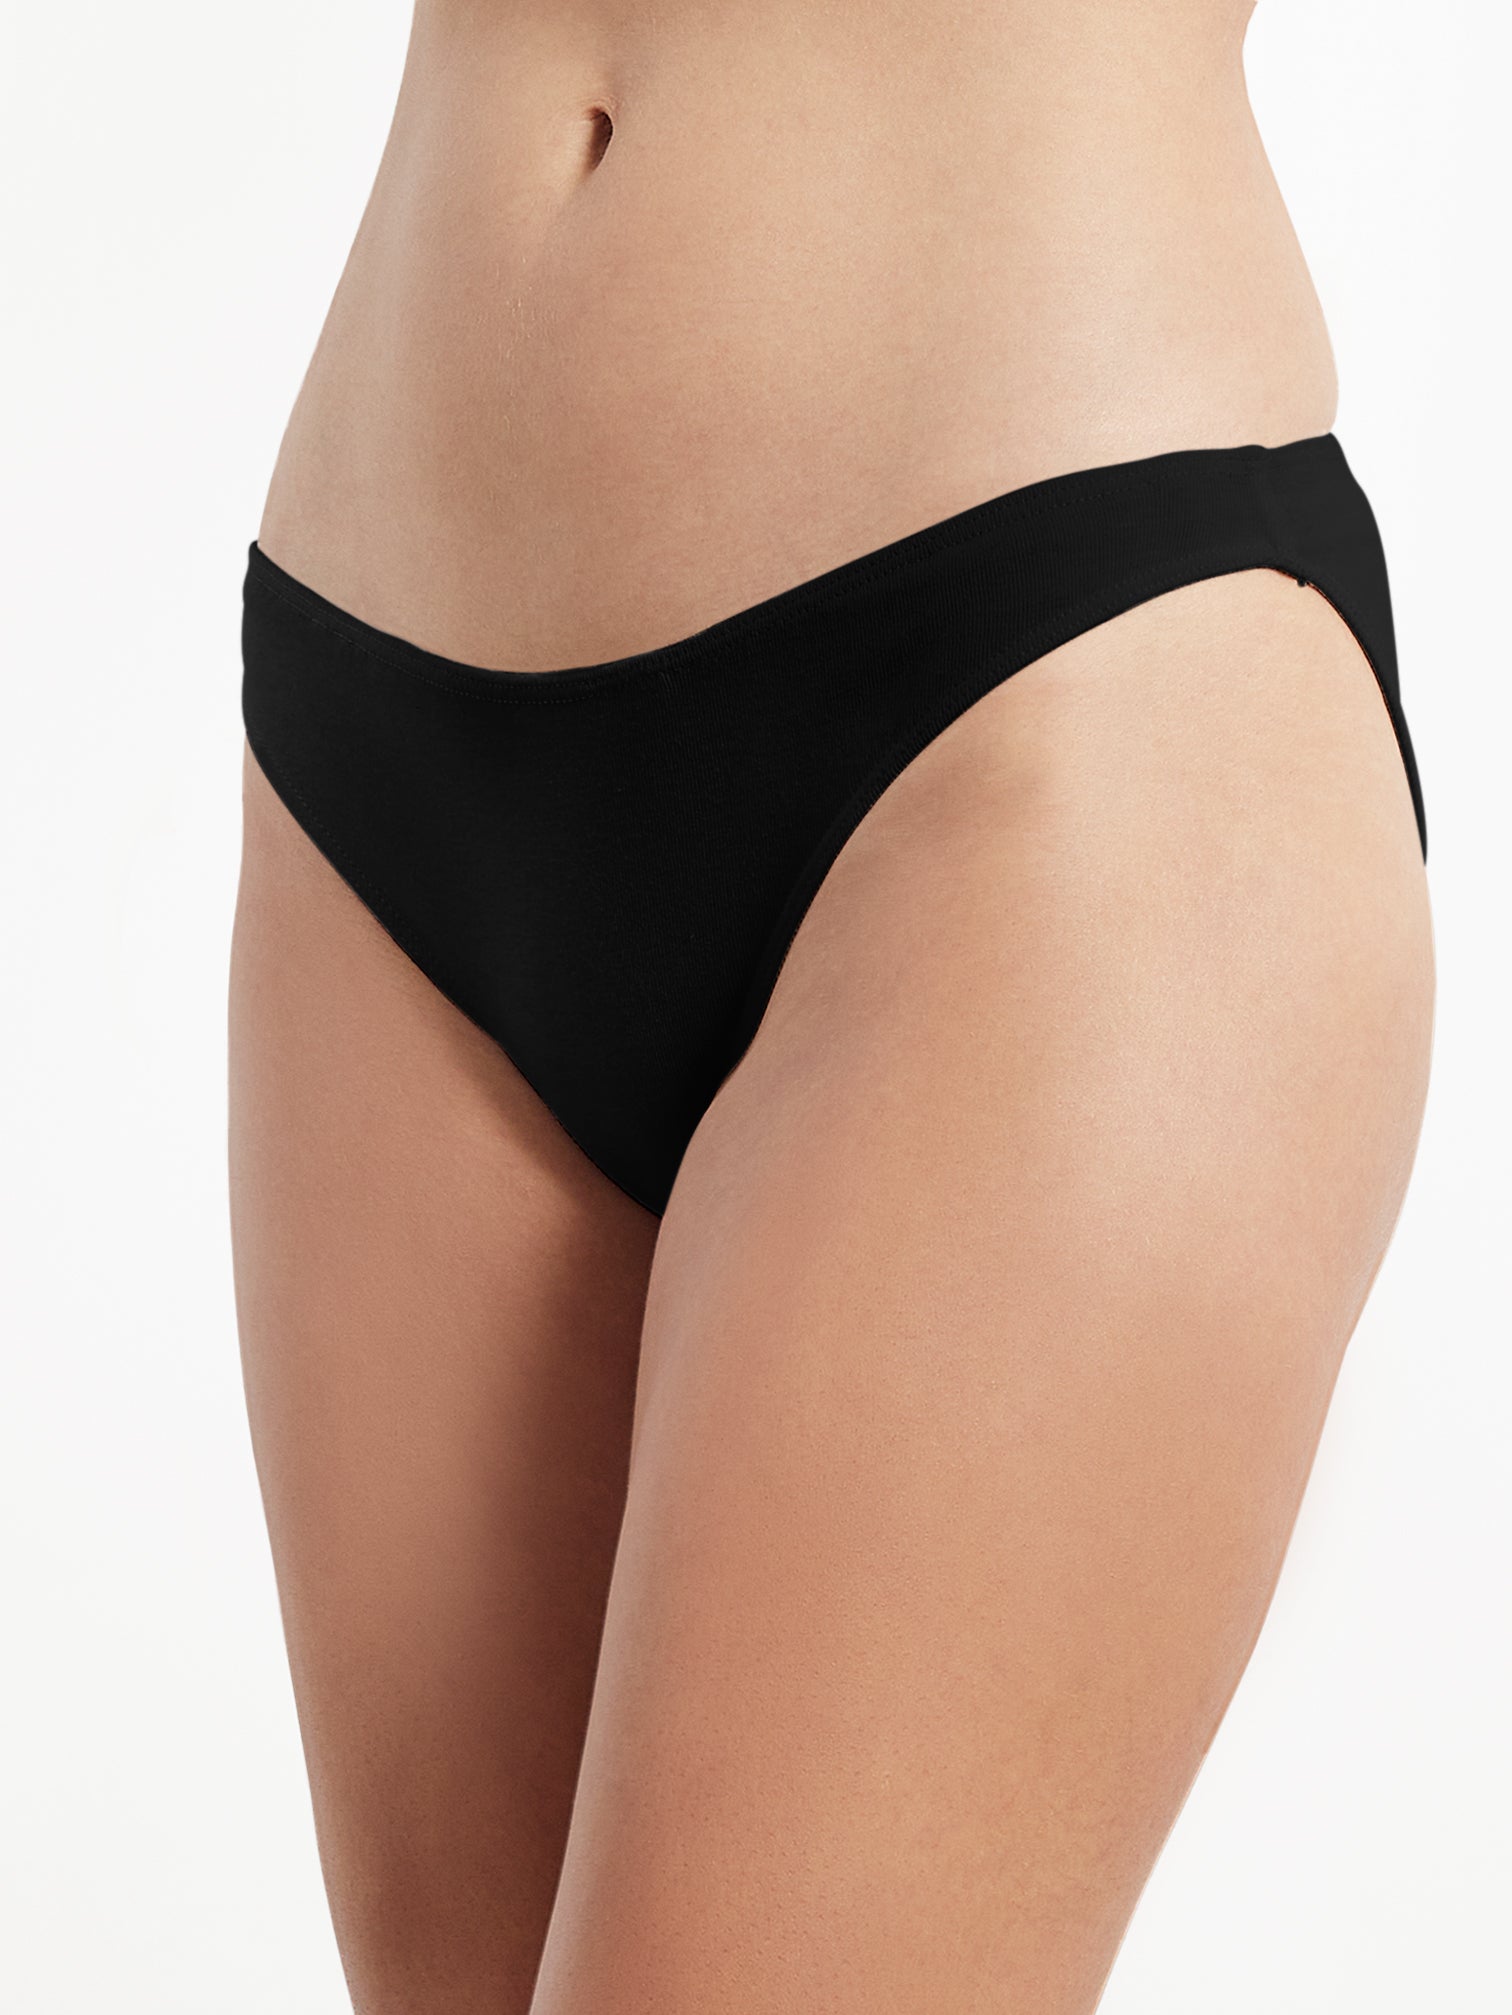 Checks Design Cotton Hip Hugger Panty For Women's at Rs 190/set in